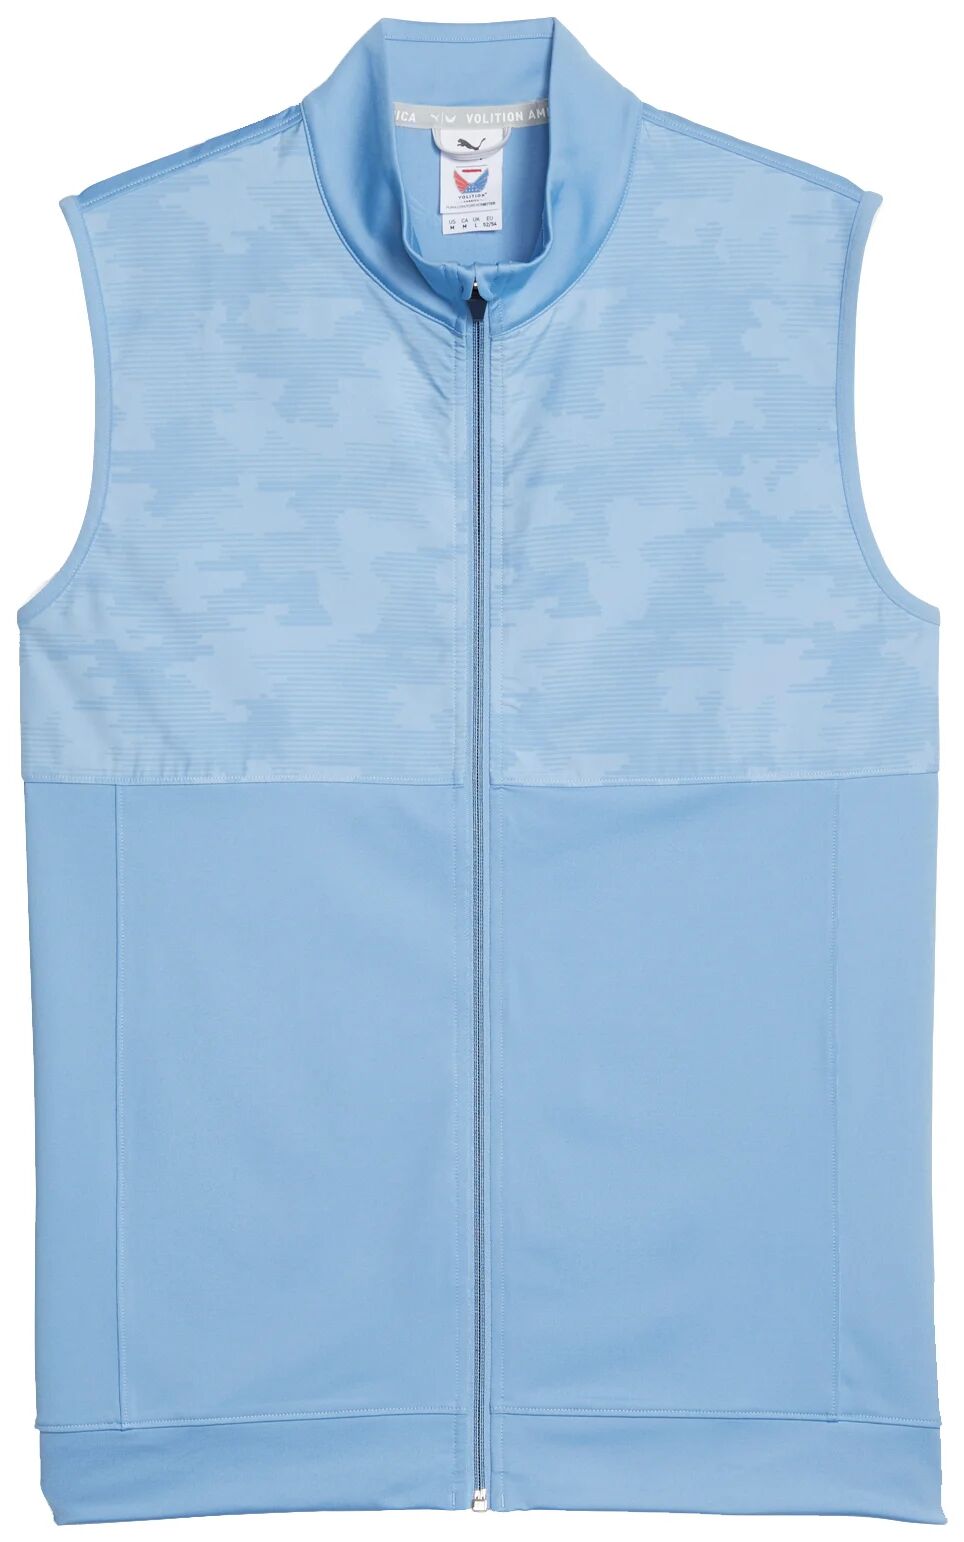 Puma Volition Camo Cover Men's Golf Vest - Blue, Size: Medium